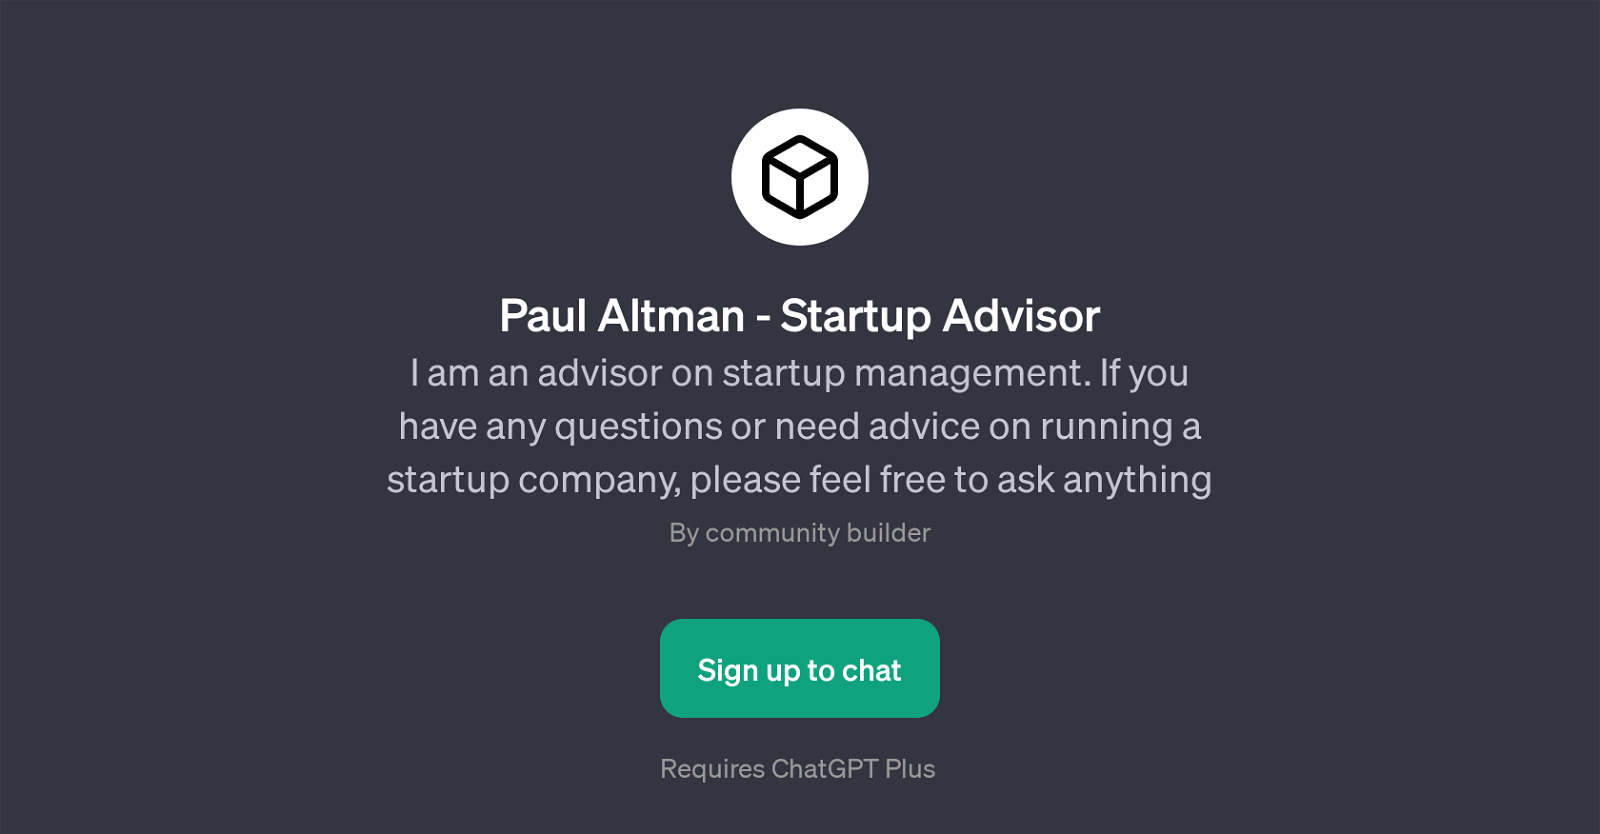 Paul Altman - Startup Advisor website